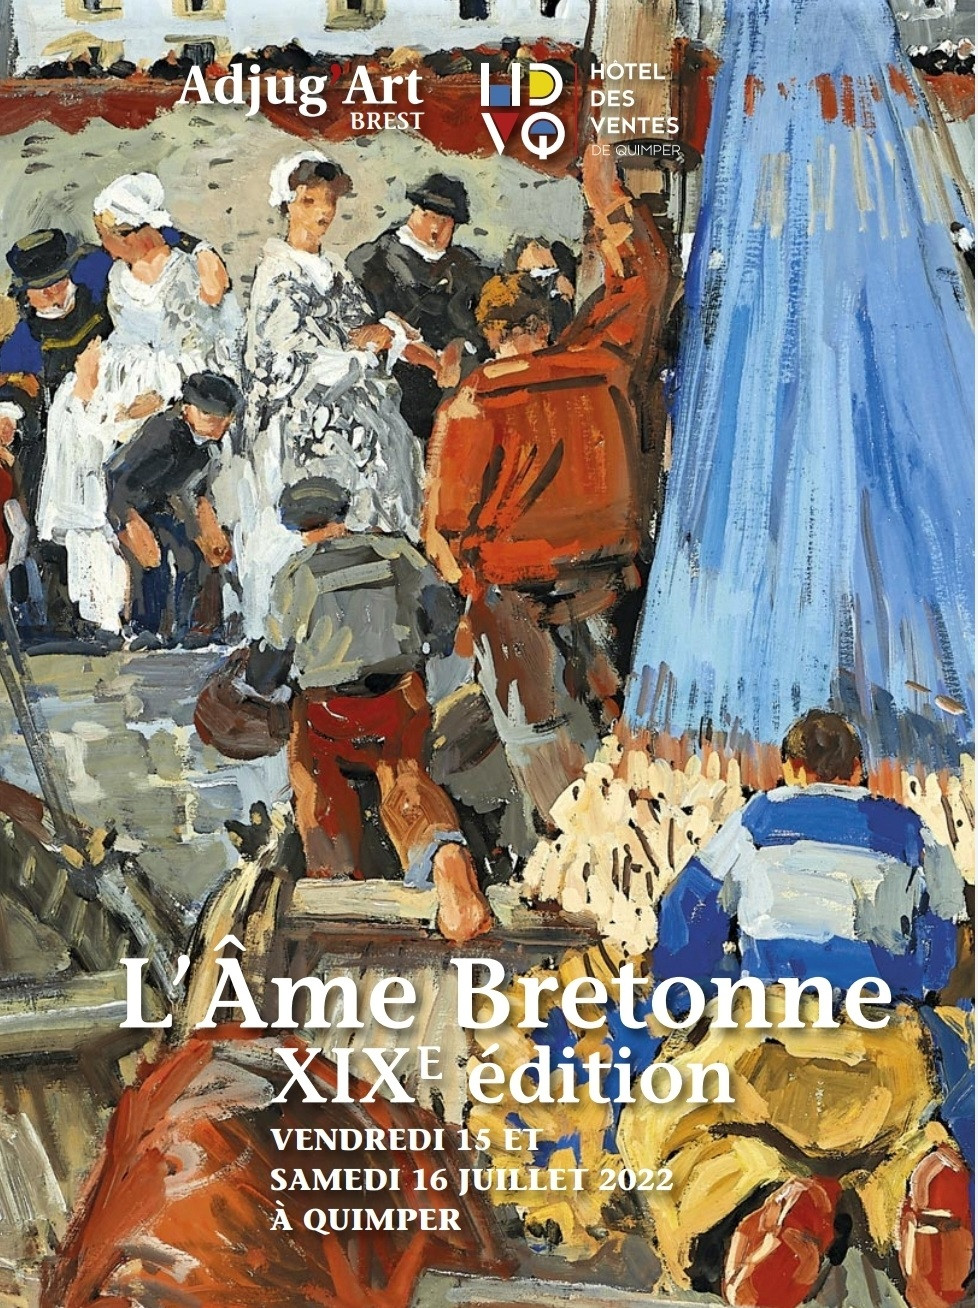 Âme bretonne catalogue summer 2021